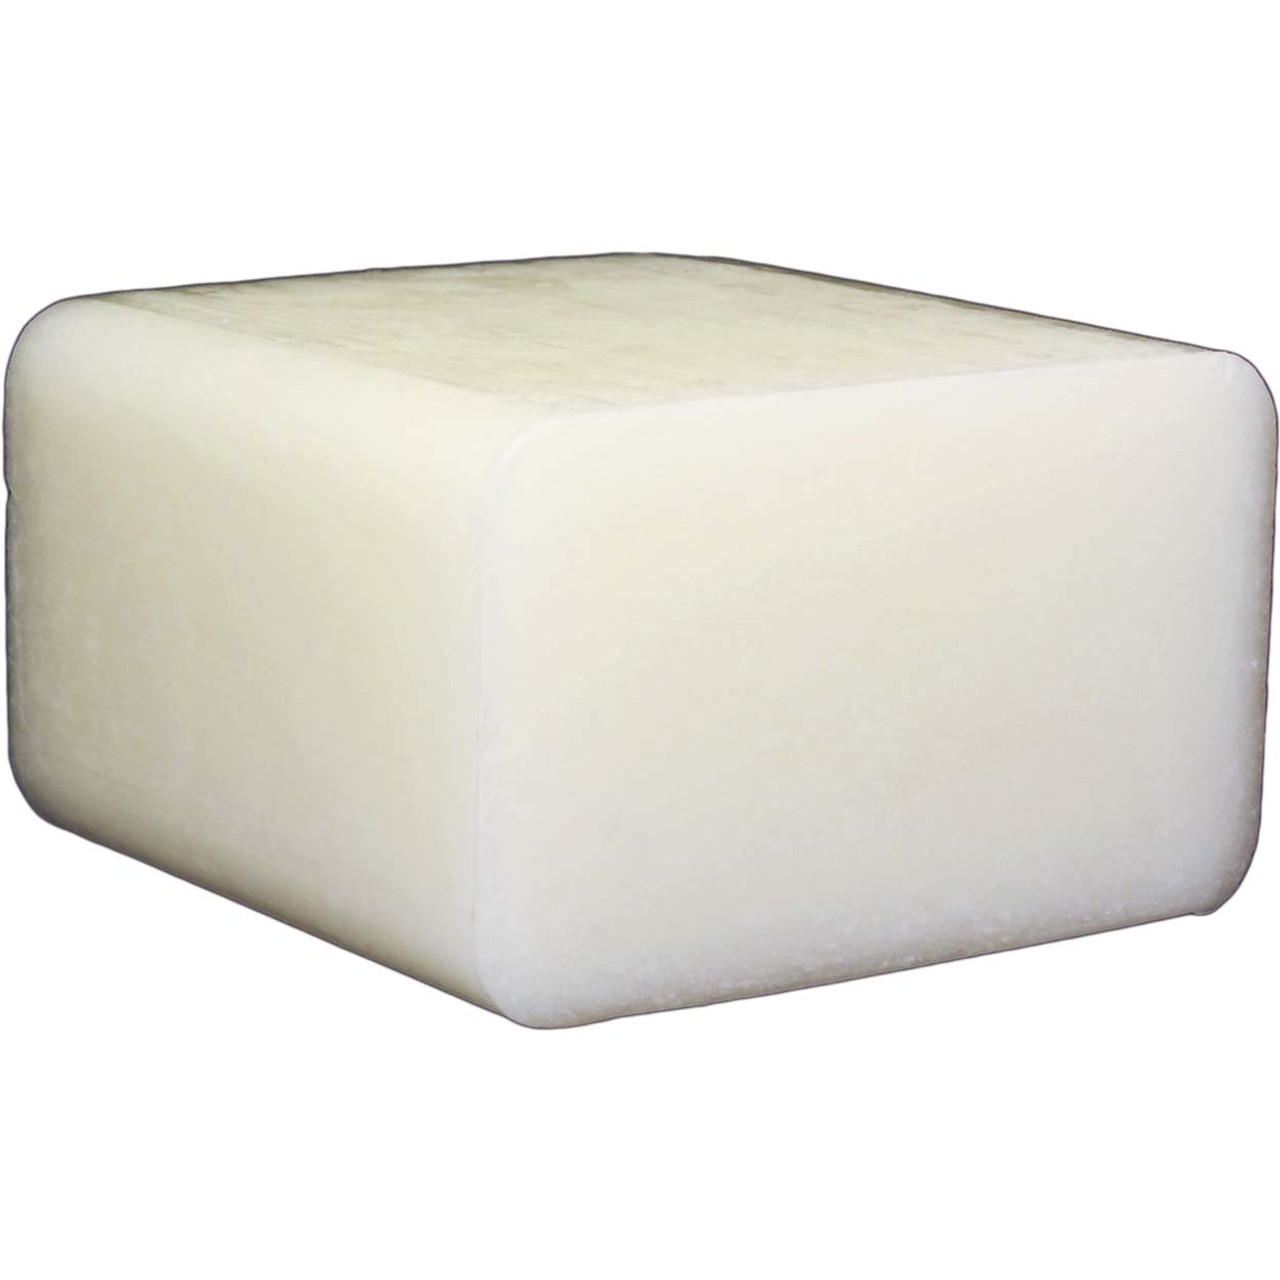 Basic Clear MP Soap Base - 2 lb Tray - Wholesale Supplies Plus